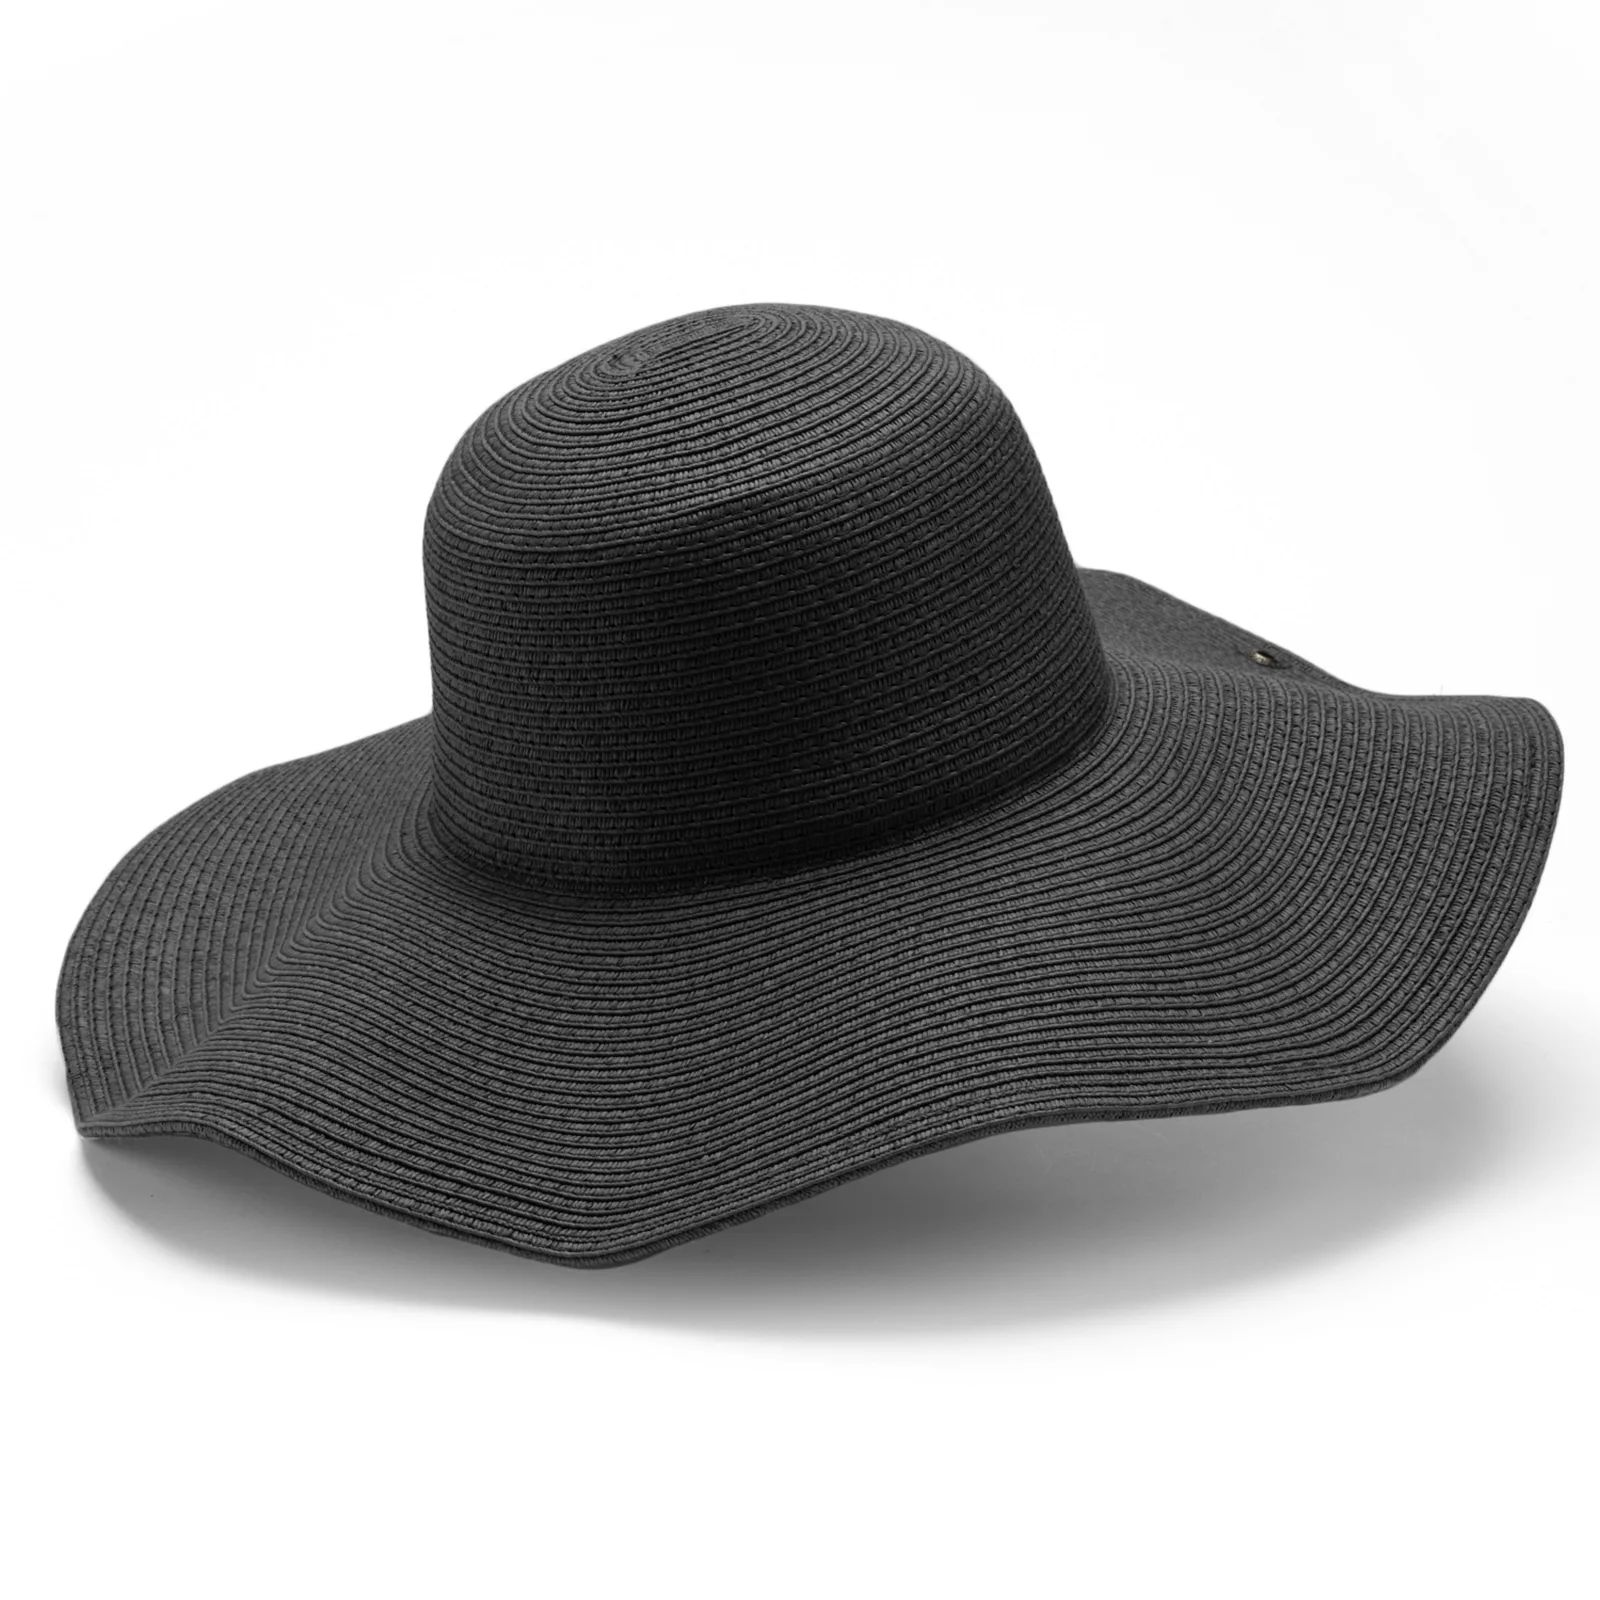 Peter Grimm Erin Floppy Hat, Black | Kohl's